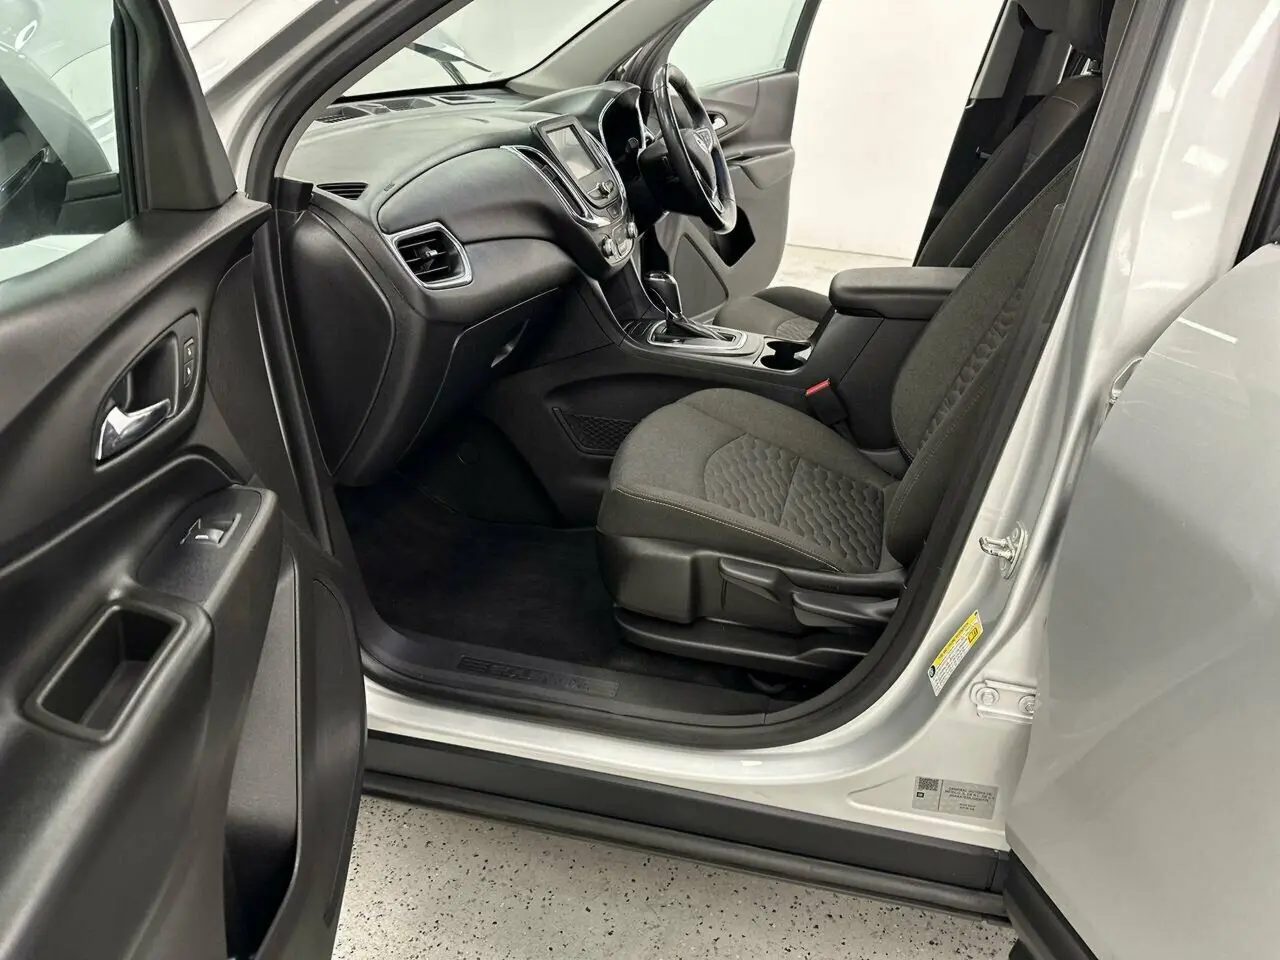 2019 Holden Equinox Image 14